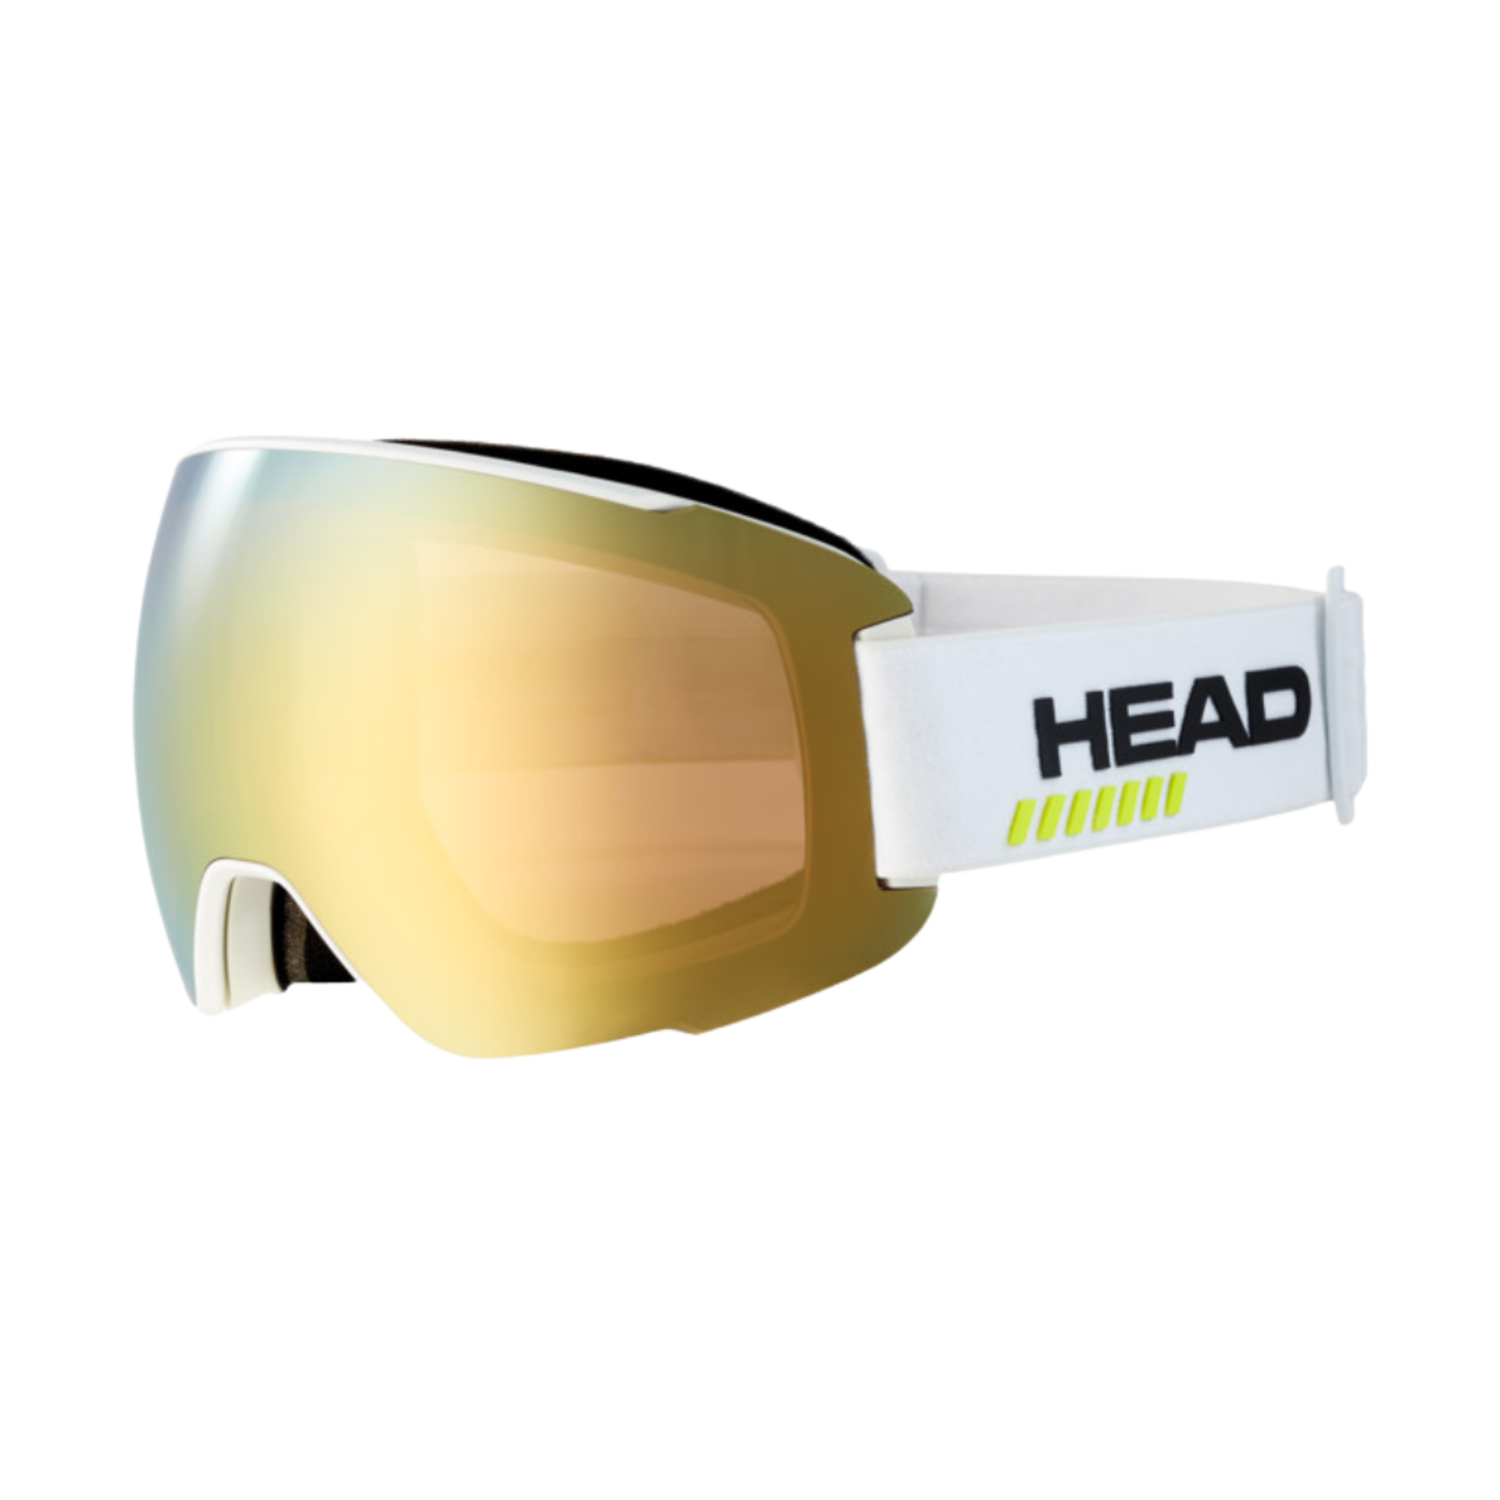 Head SENTINEL 5K Goggles + Extra Lens - Boutique Les Sommets